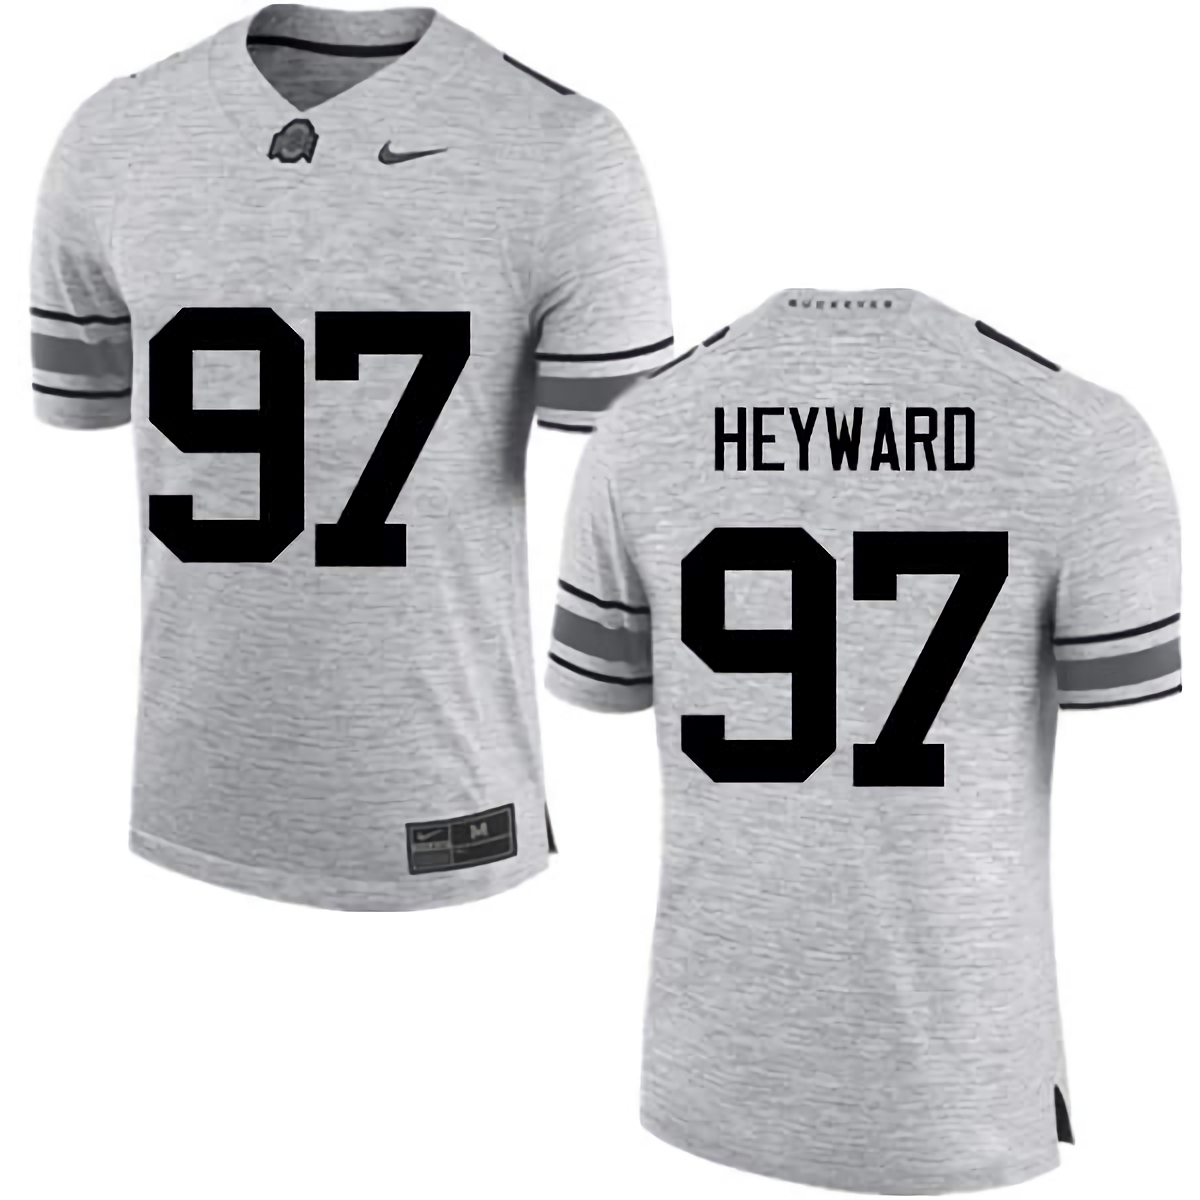 Cameron Heyward Ohio State Buckeyes Men's NCAA #97 Nike Gray College Stitched Football Jersey MCM8156ZI